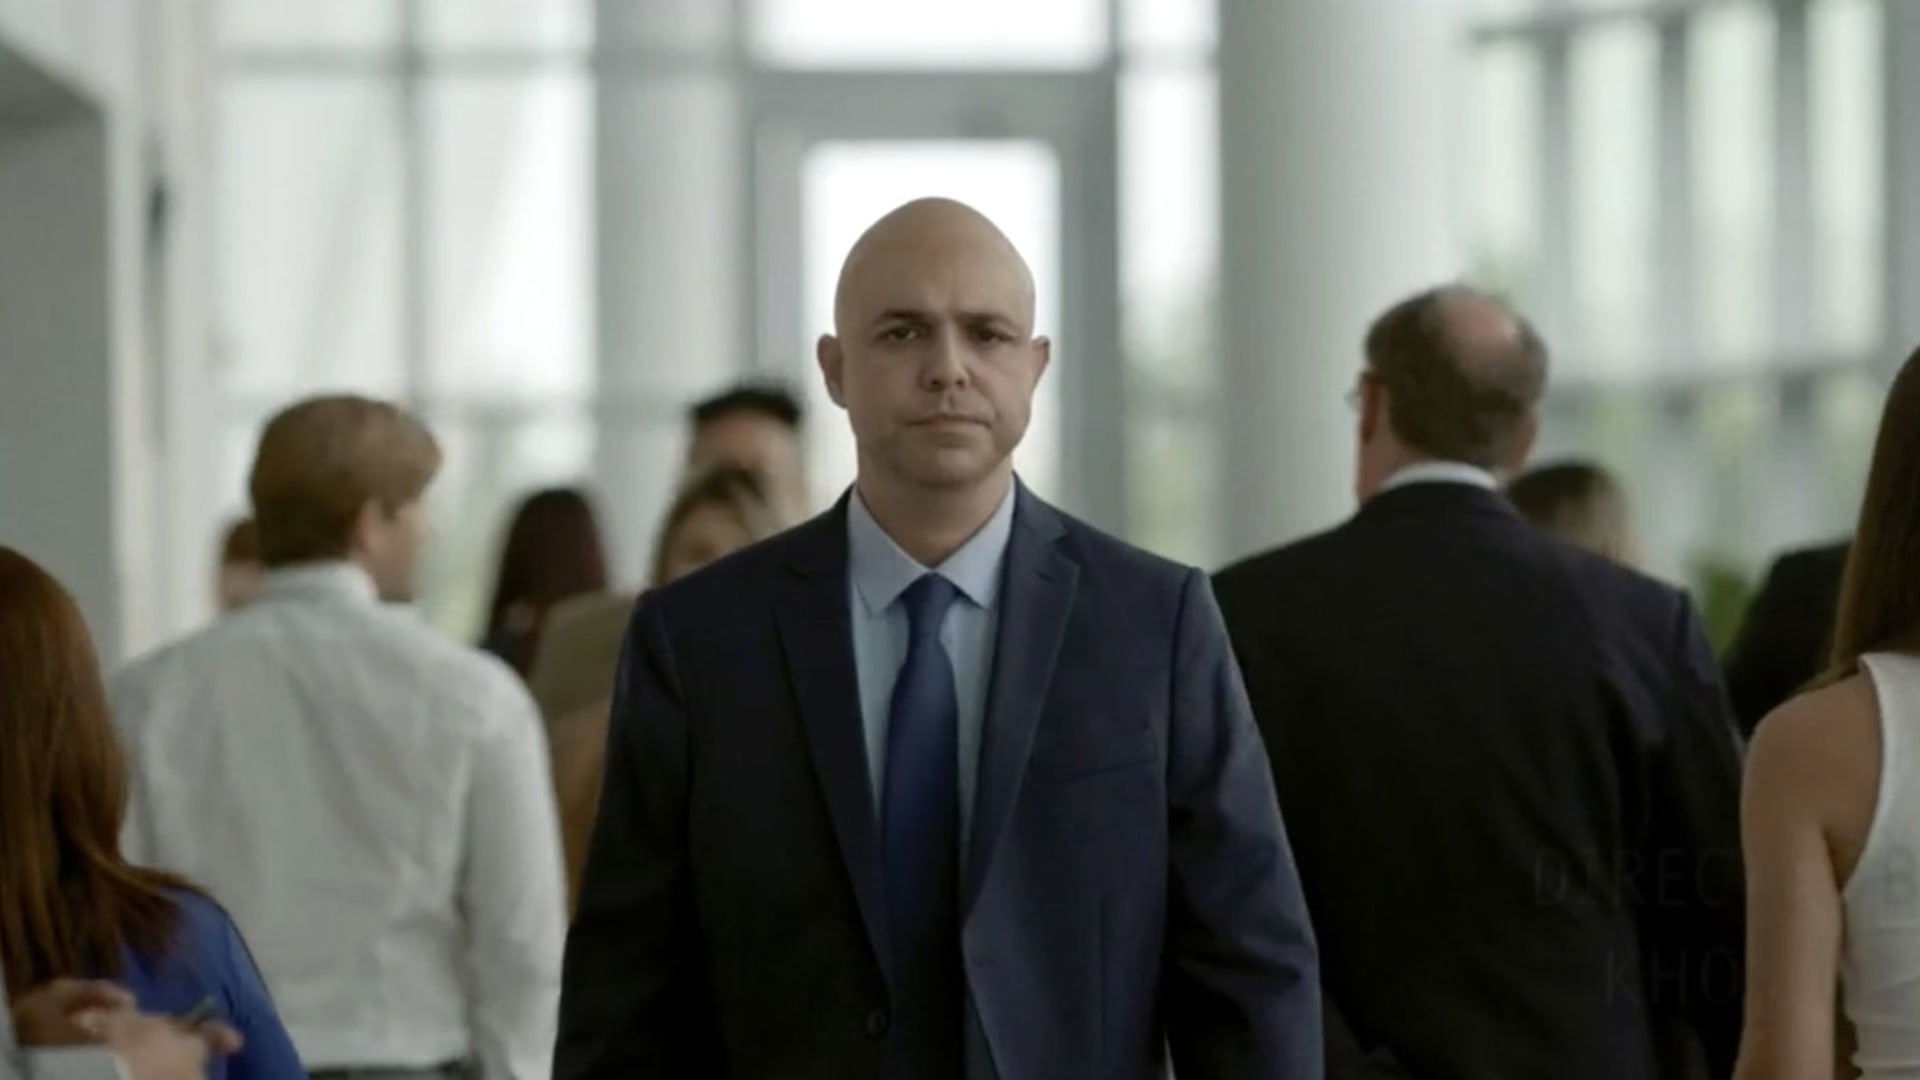 Armando Gutierrez as Jeff Bezos in the film "Bezos."